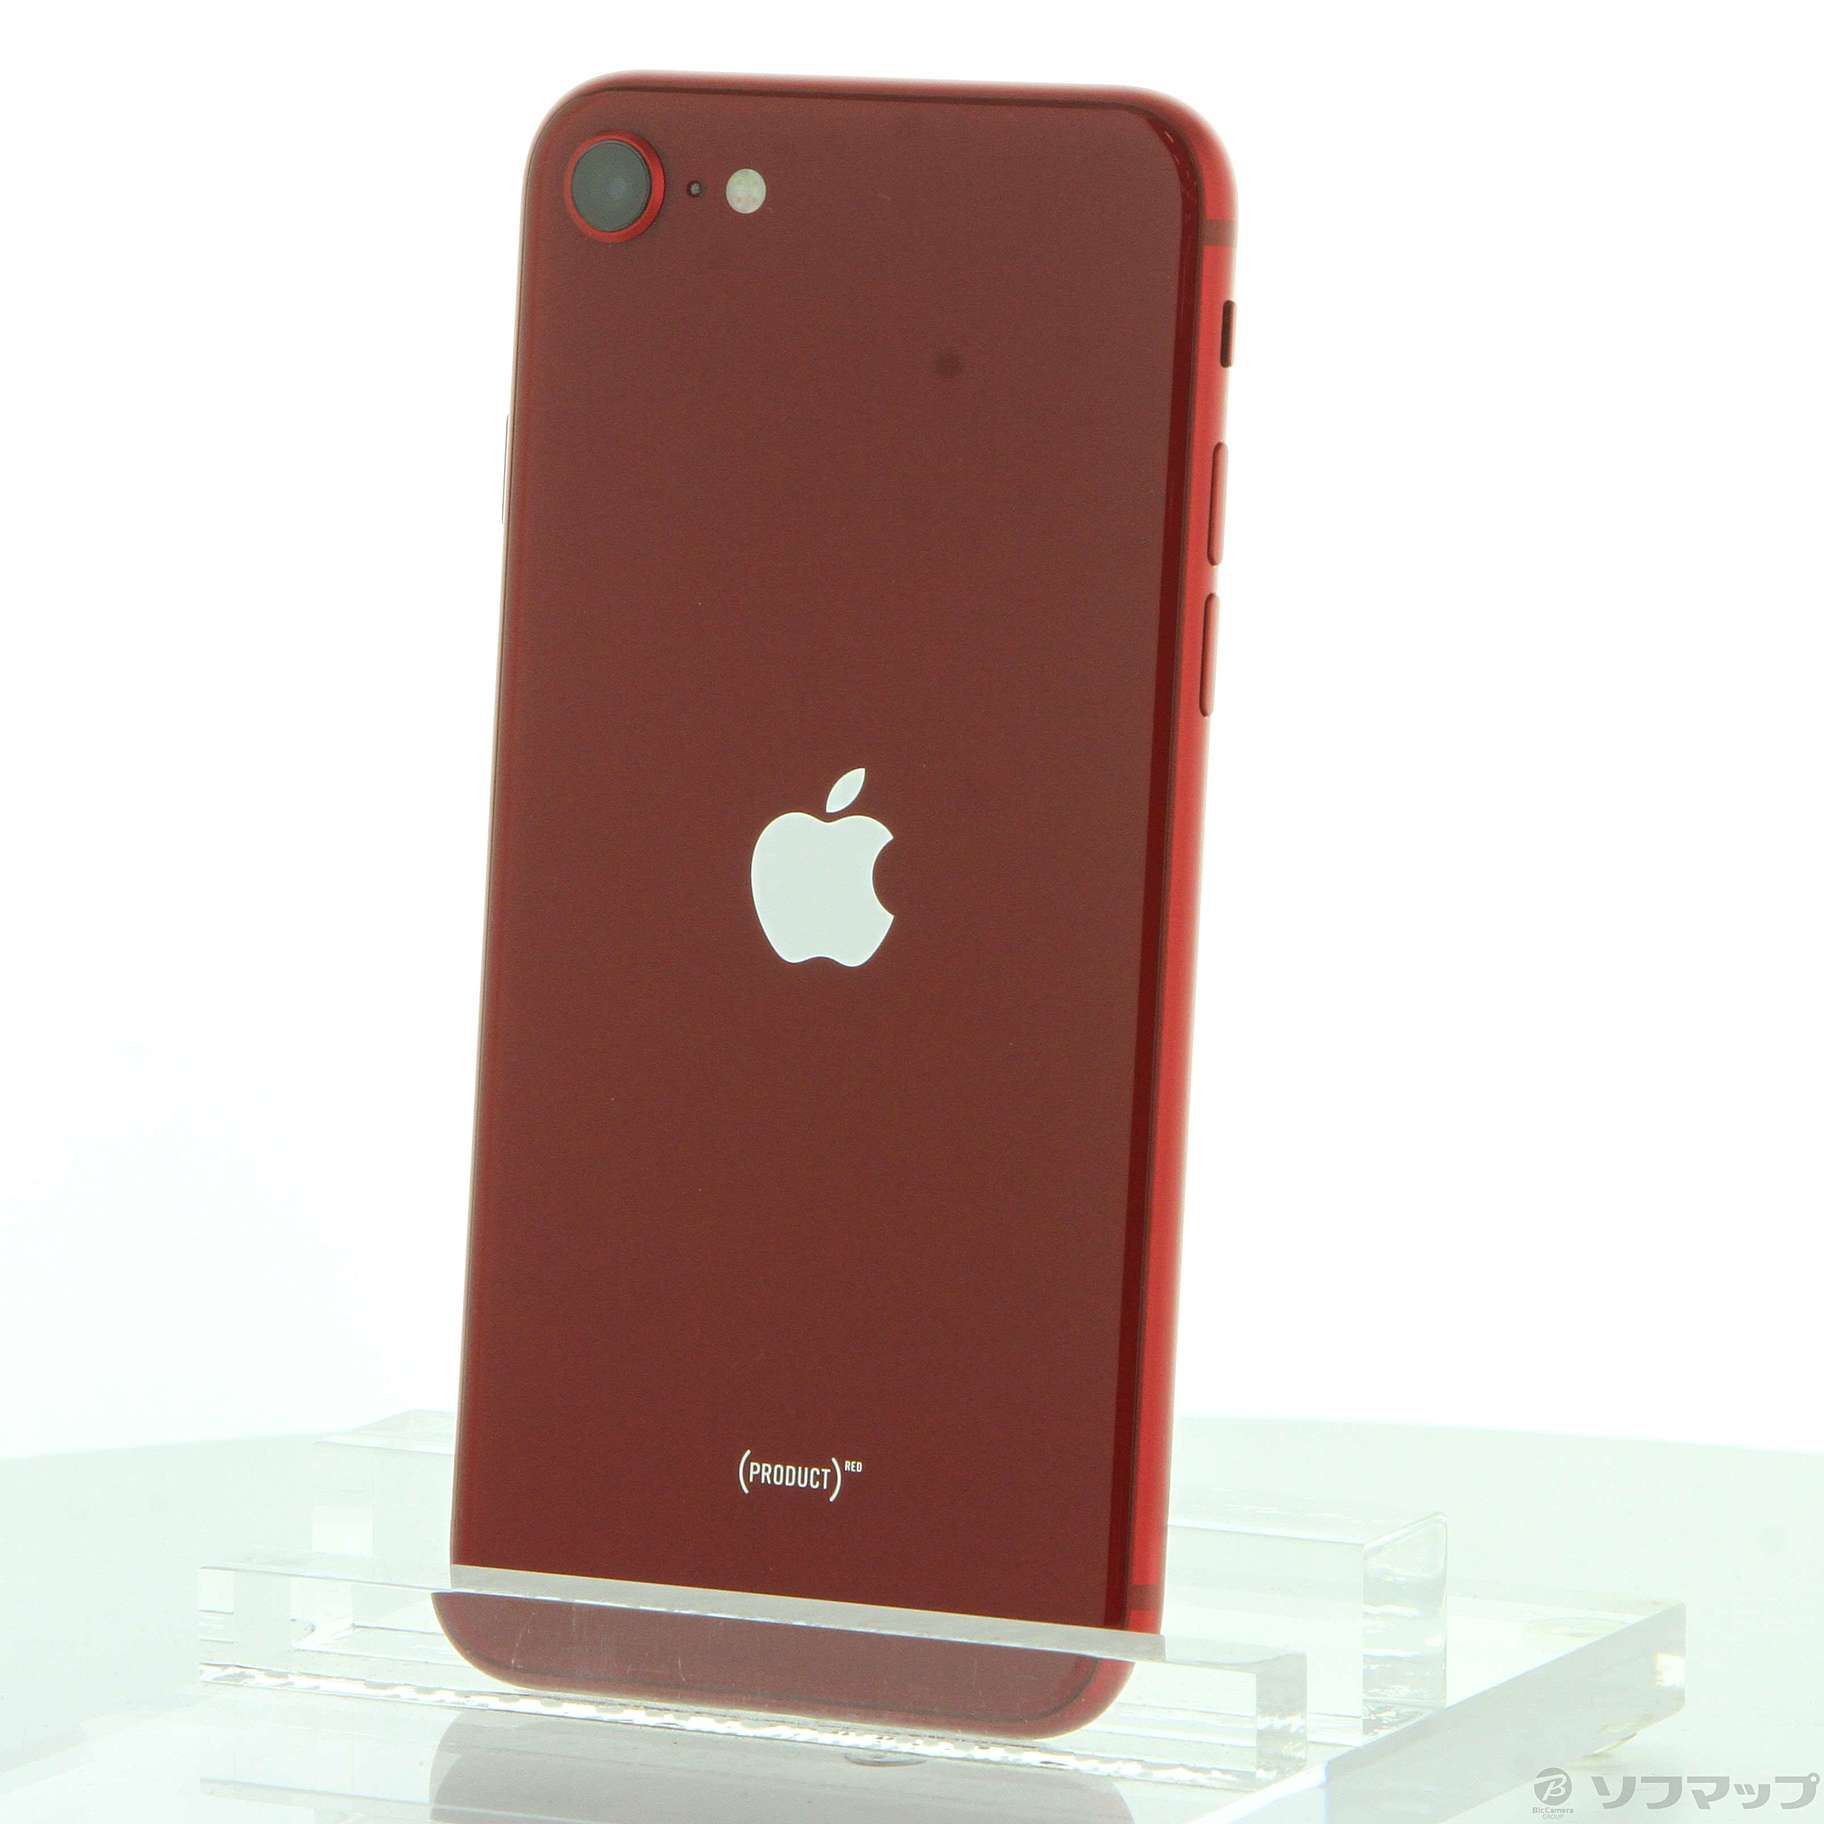 iphoneSE 128GB red SIMフリー 新品未使用 第3世代 - スマートフォン本体